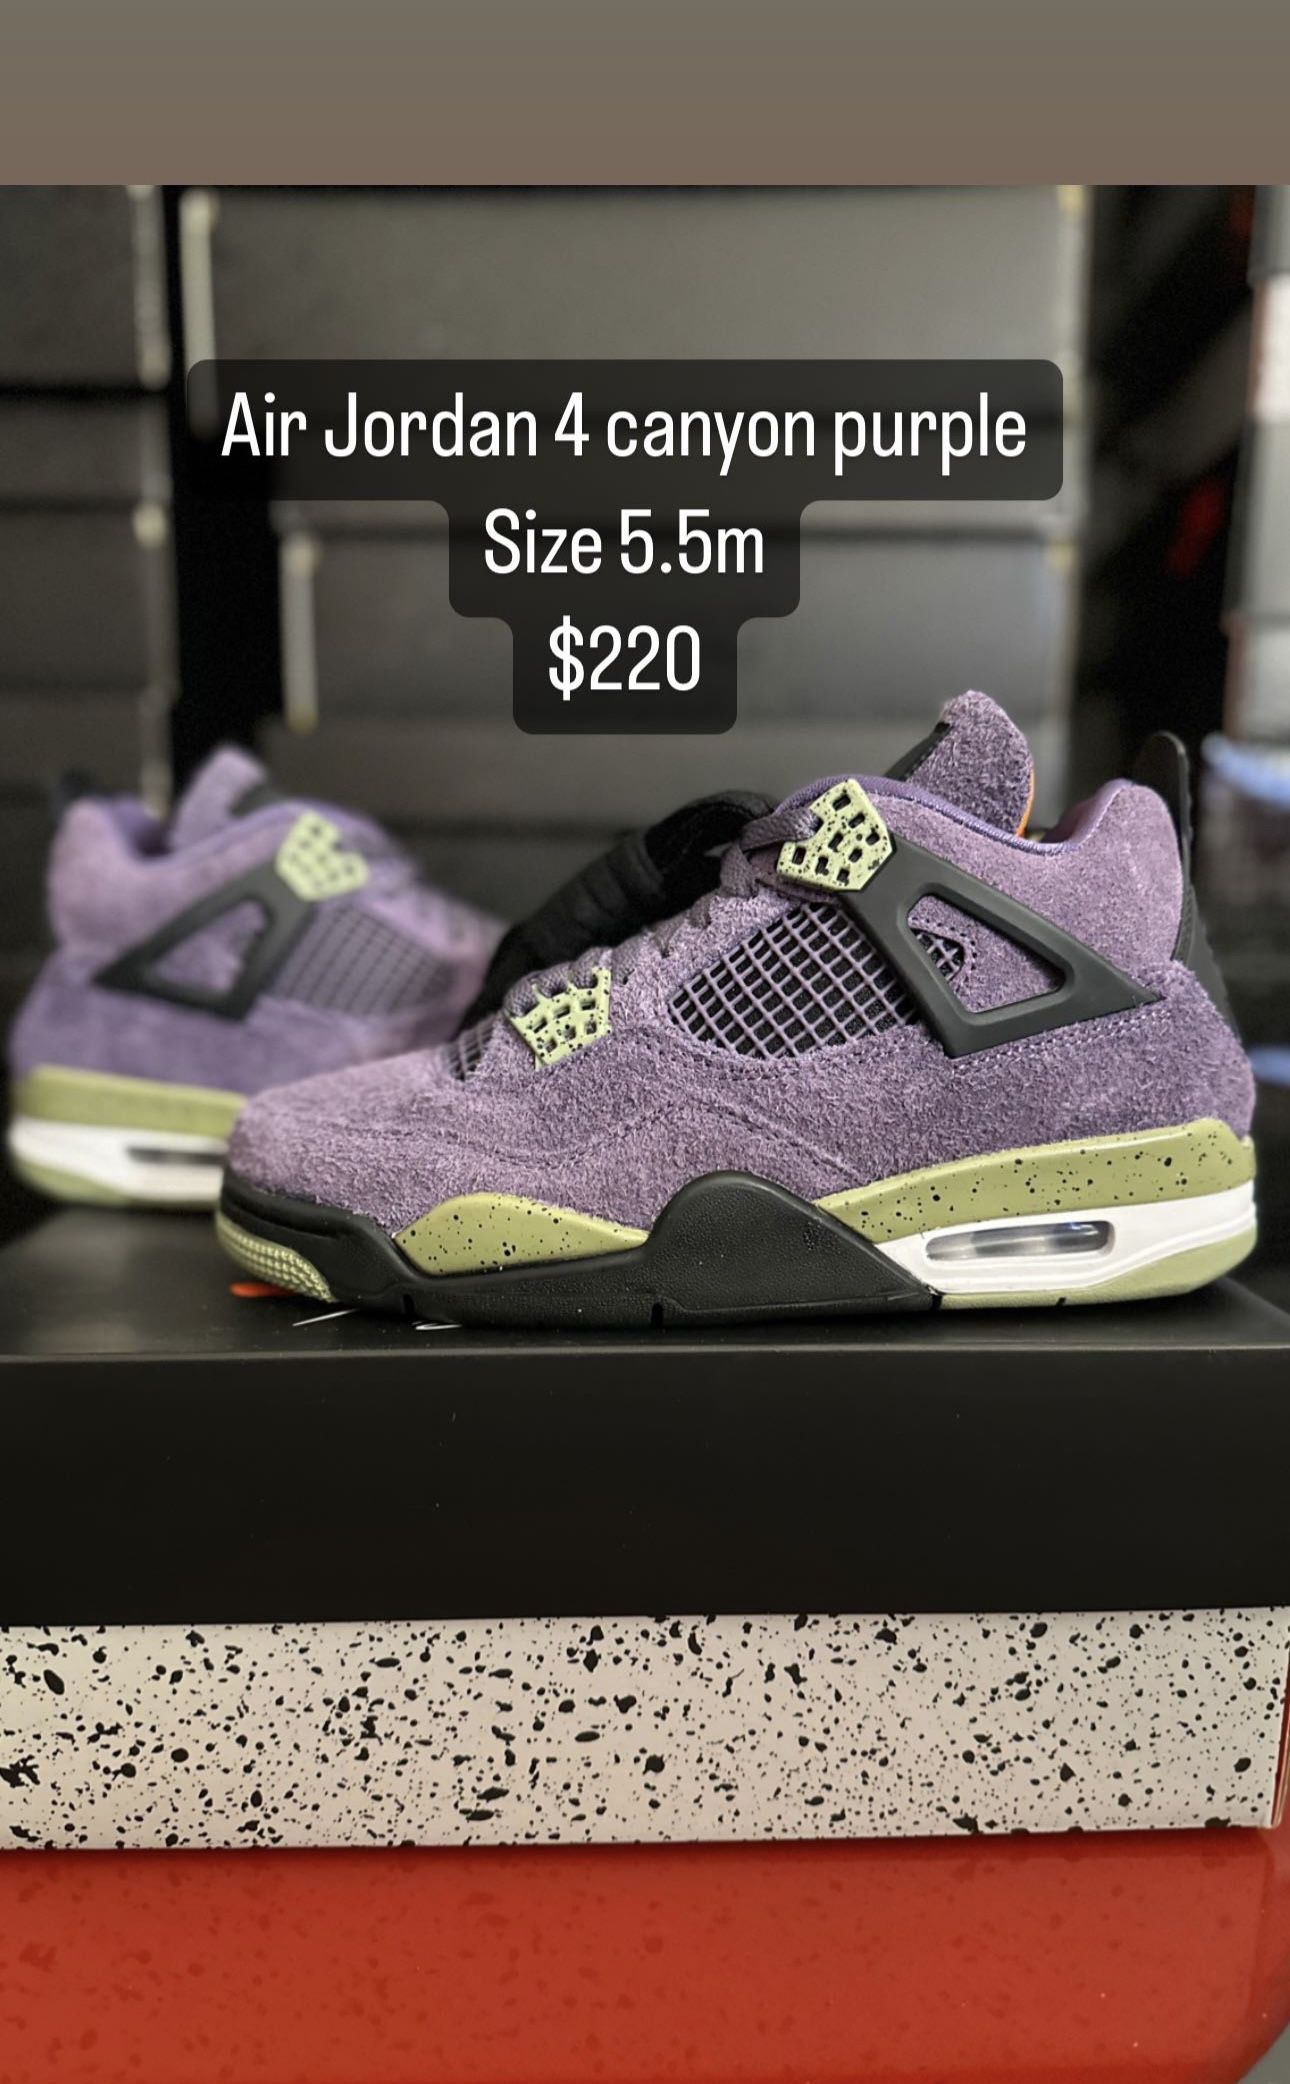 Jordan 4 for Sale, Authenticity Guaranteed